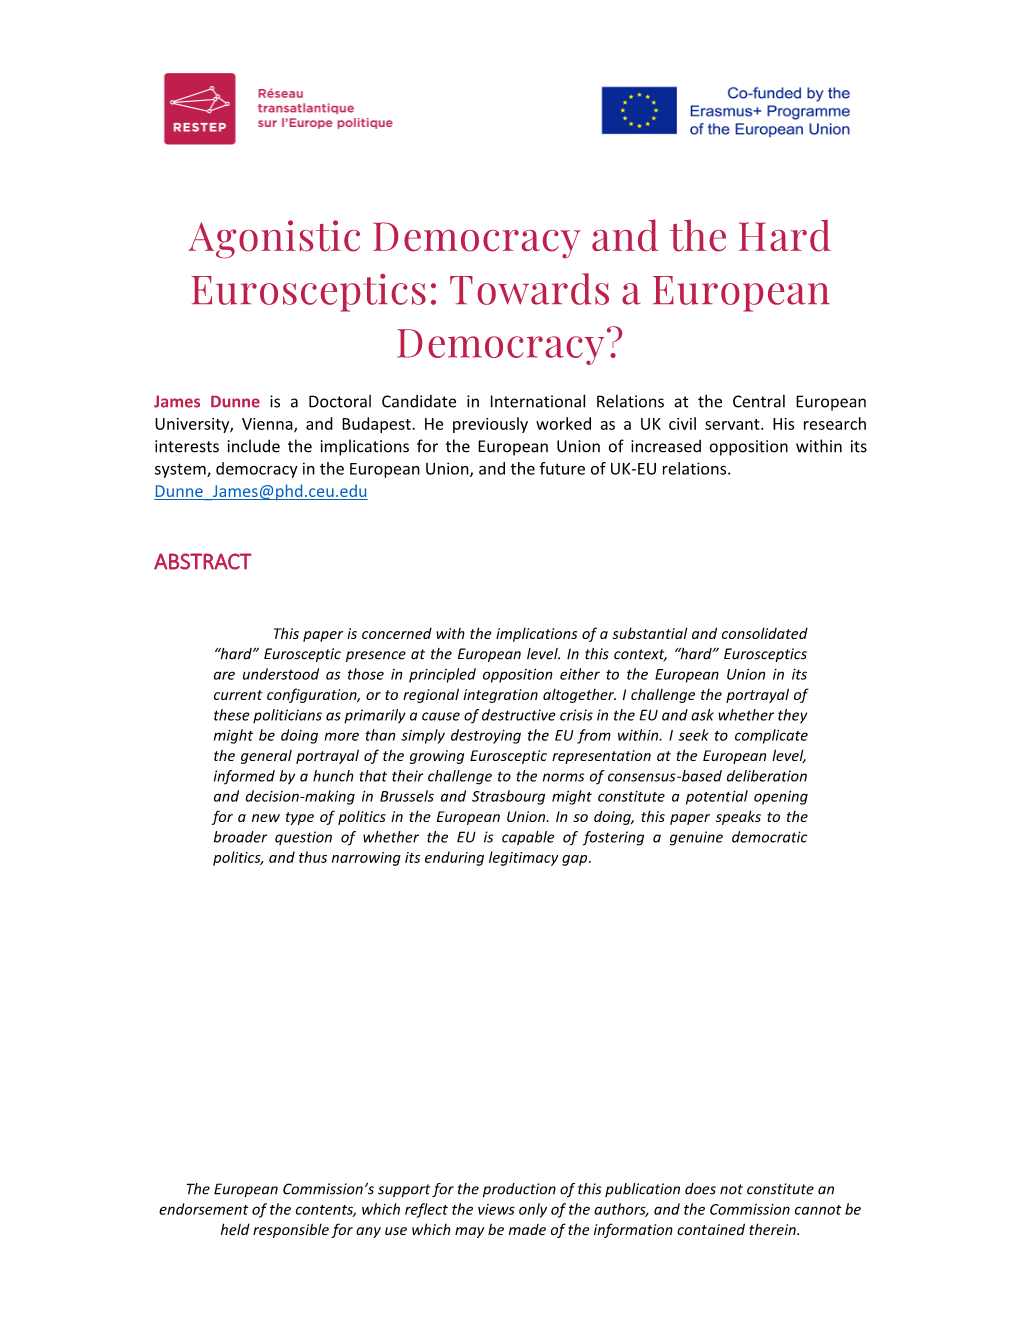 Agonistic Democracy and the Hard Eurosceptics: Towards a European Democracy?